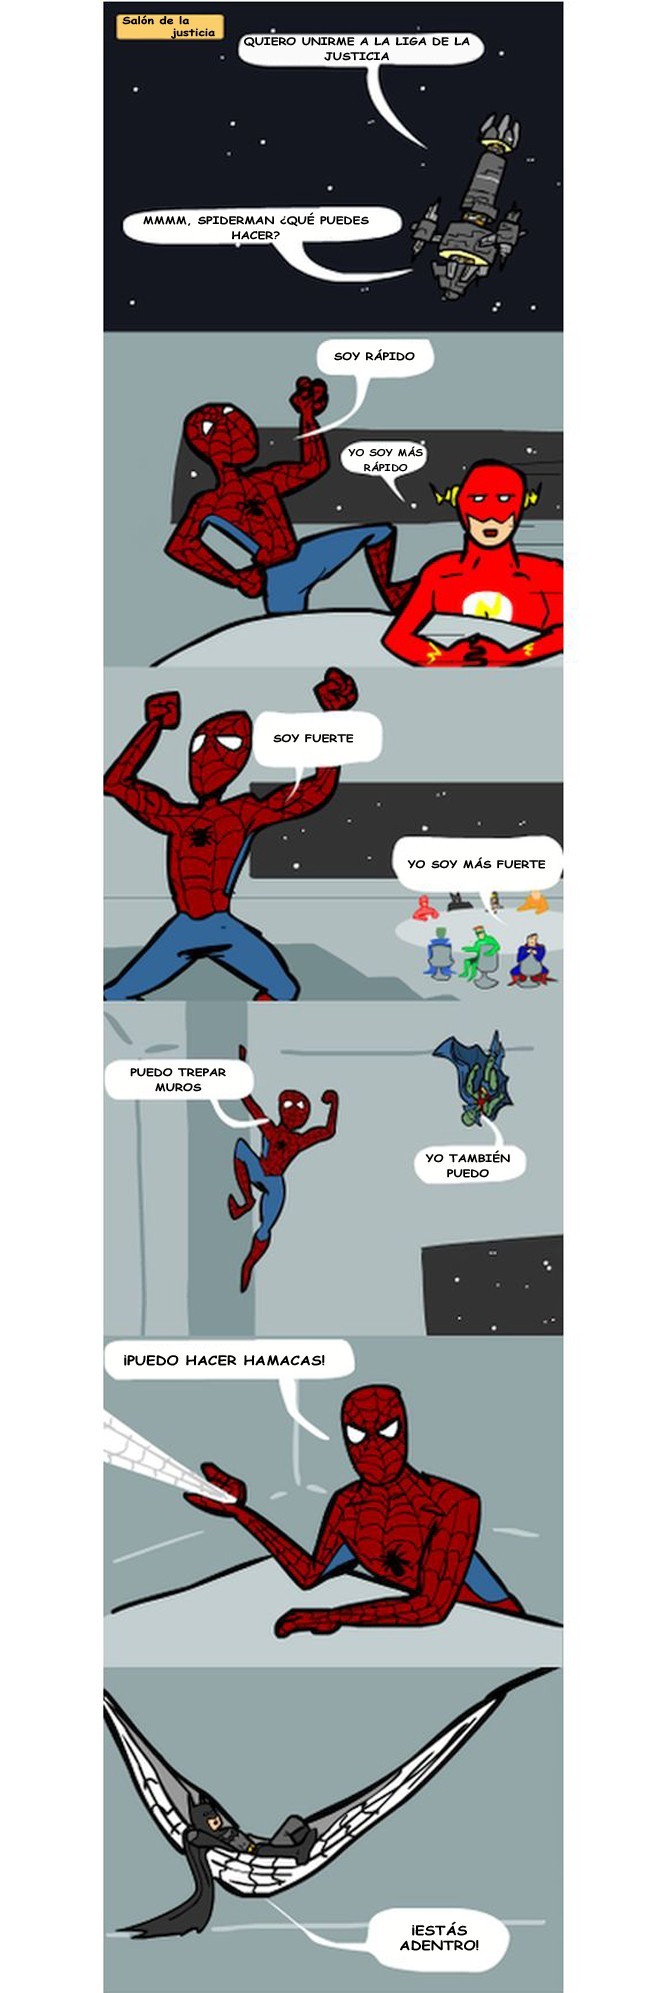 Spider Hamacas - meme